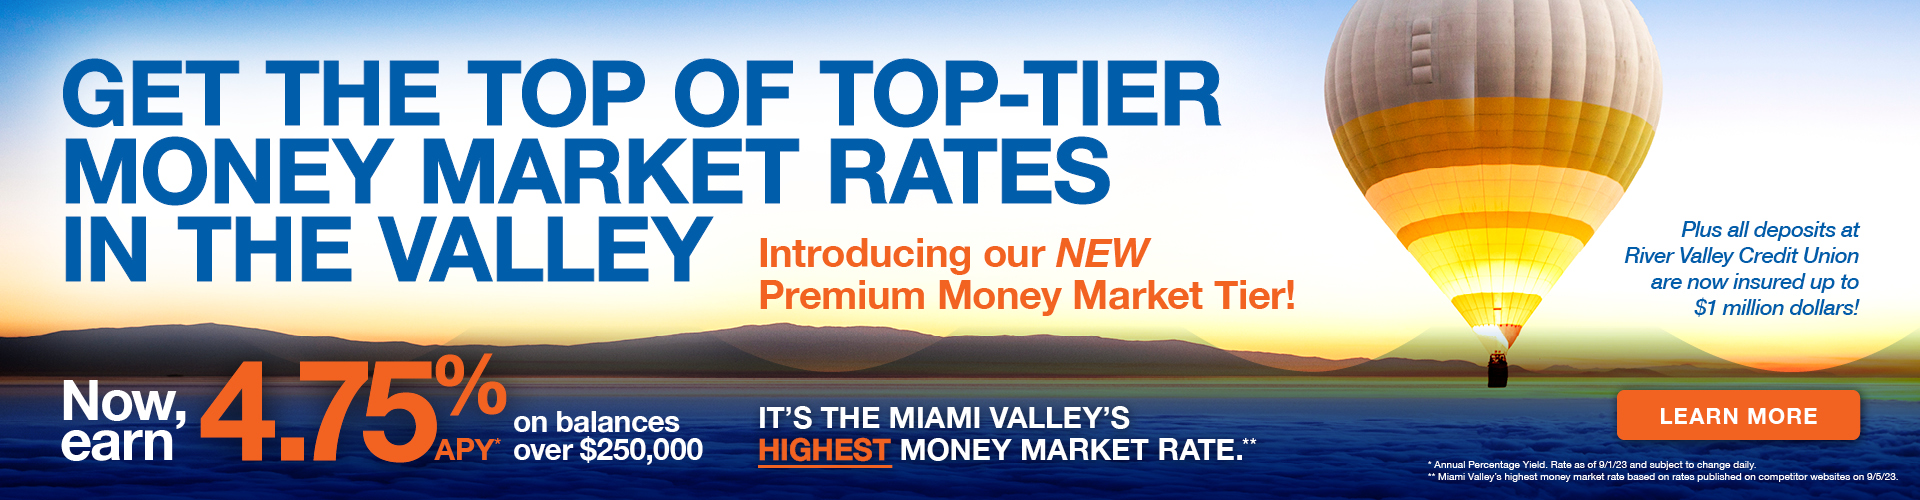 Premium Money Market Tier Banner